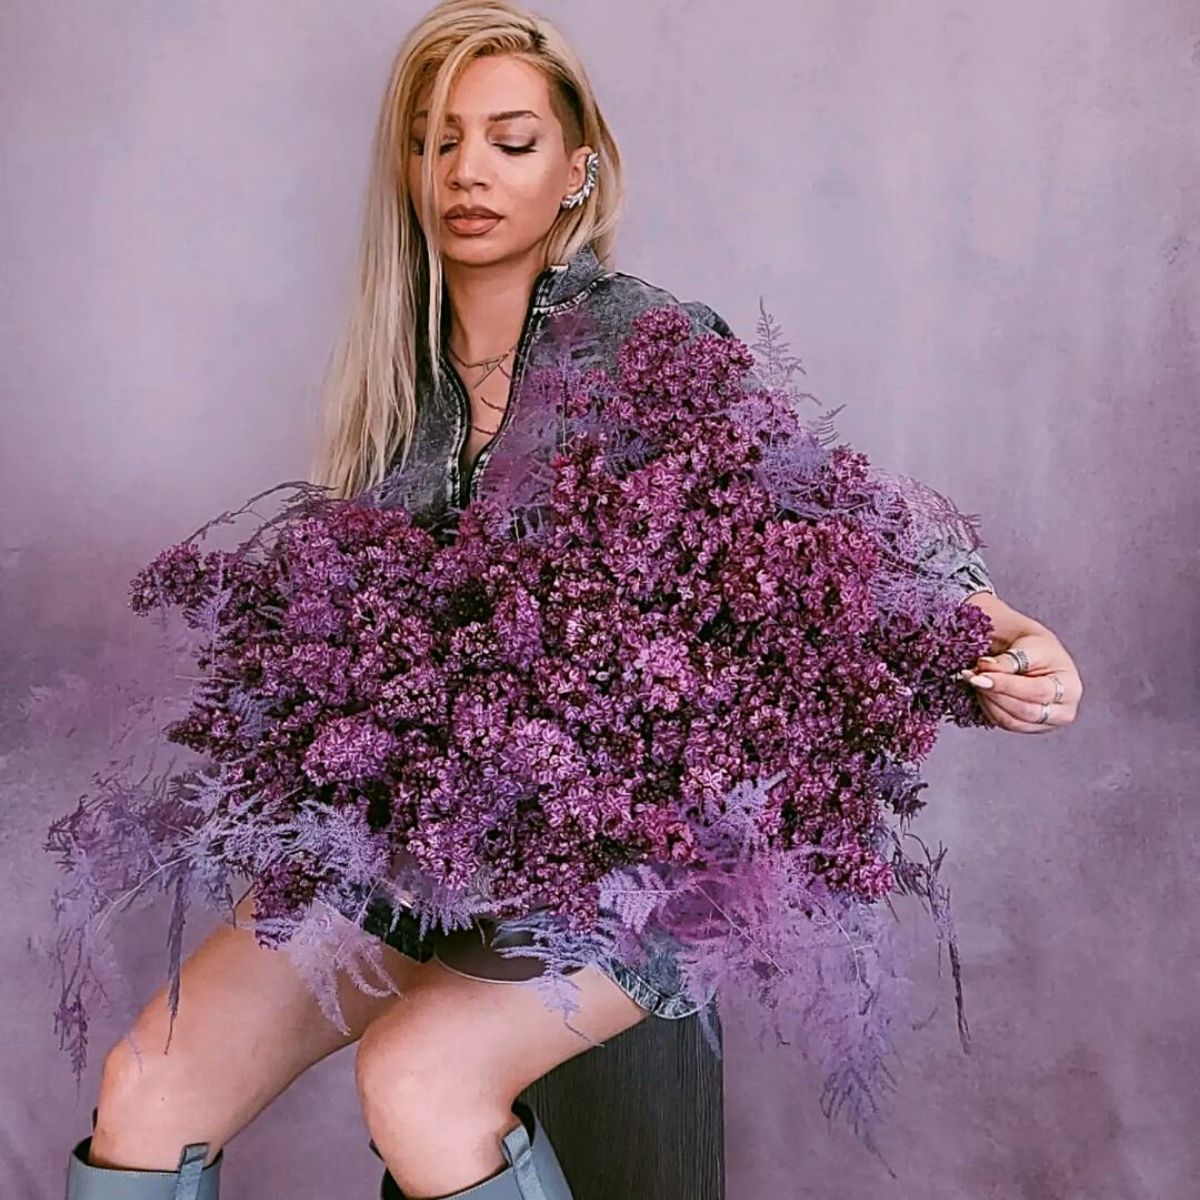 Araks Sarkisyan with her purple bouquet on Thursd